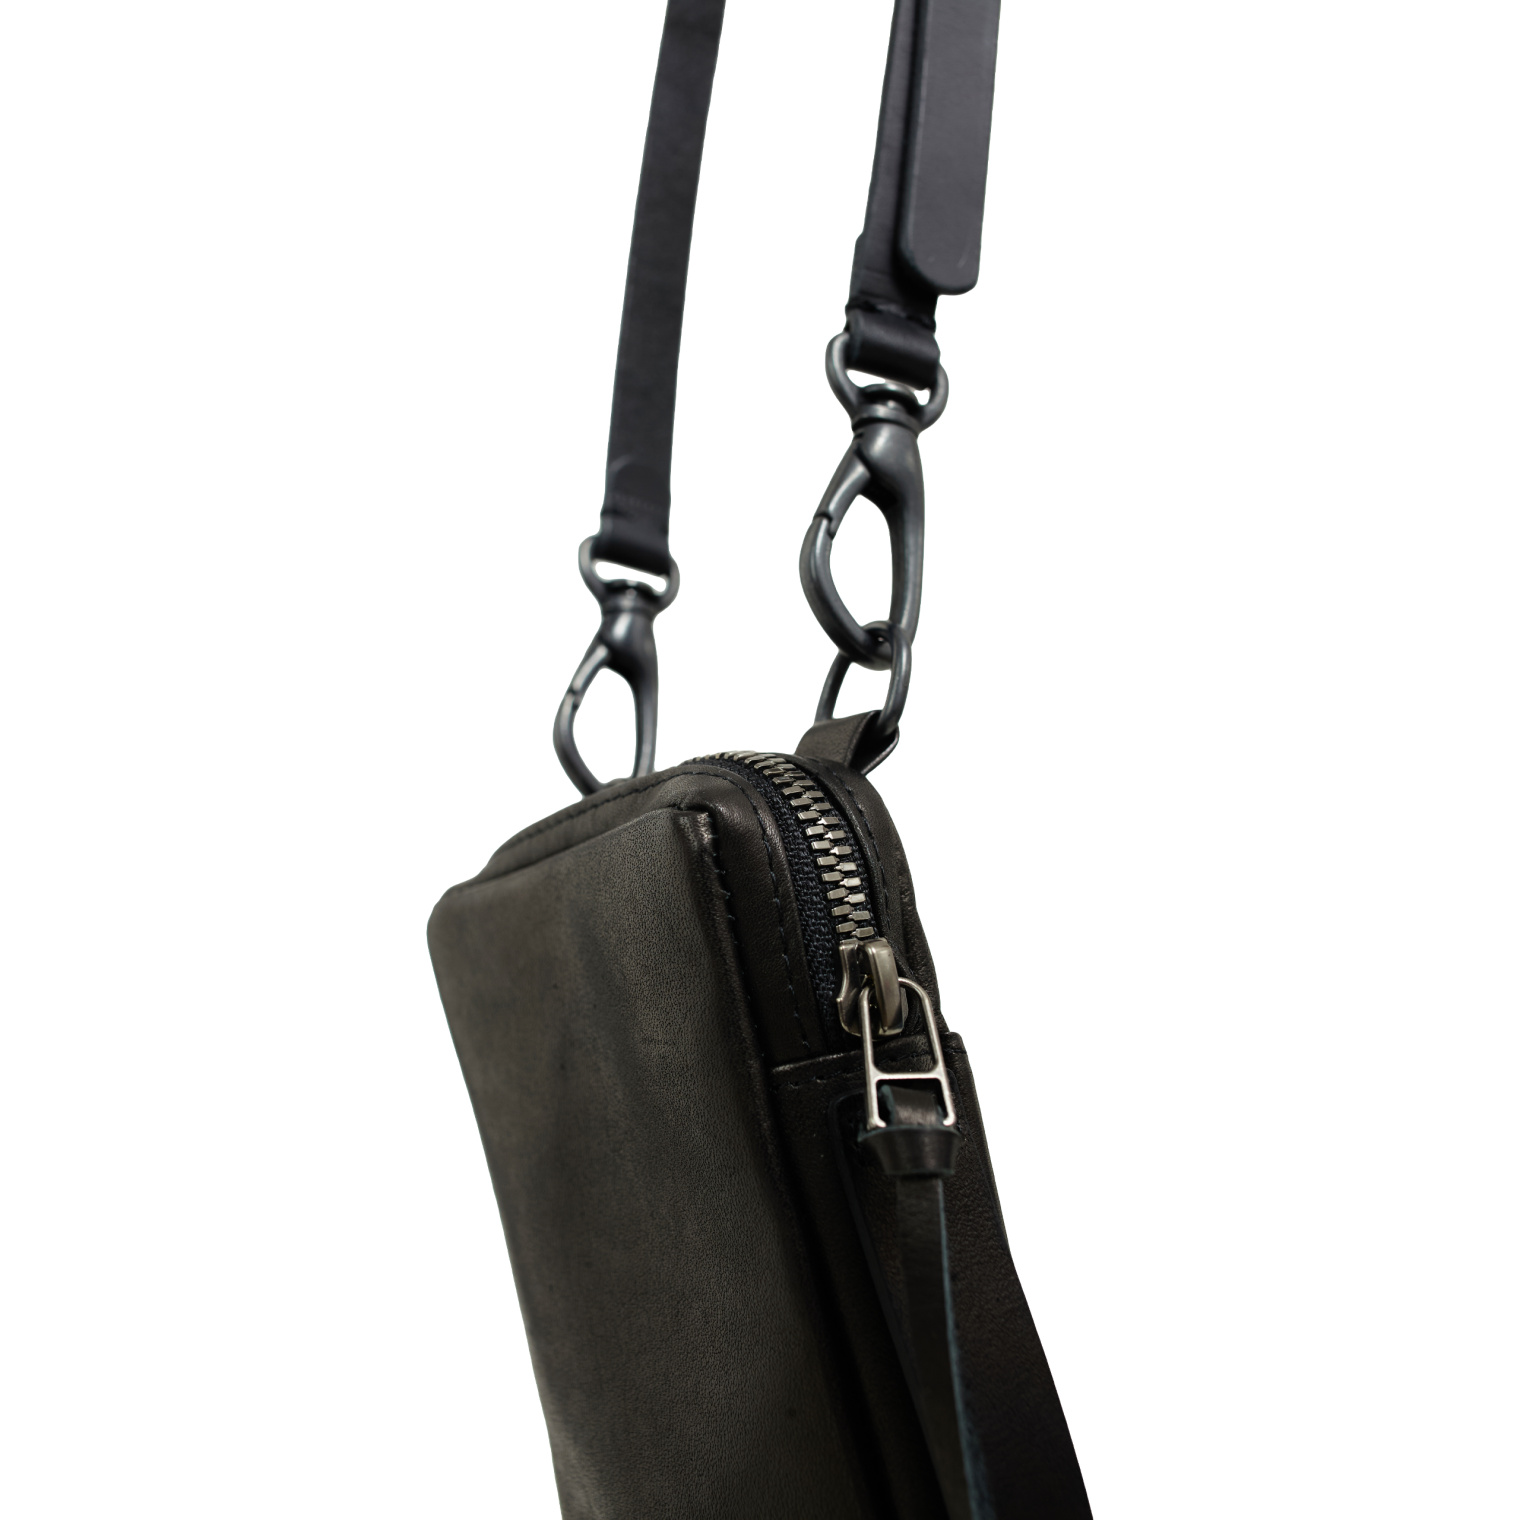 The Viridi-Anne Black leather bag